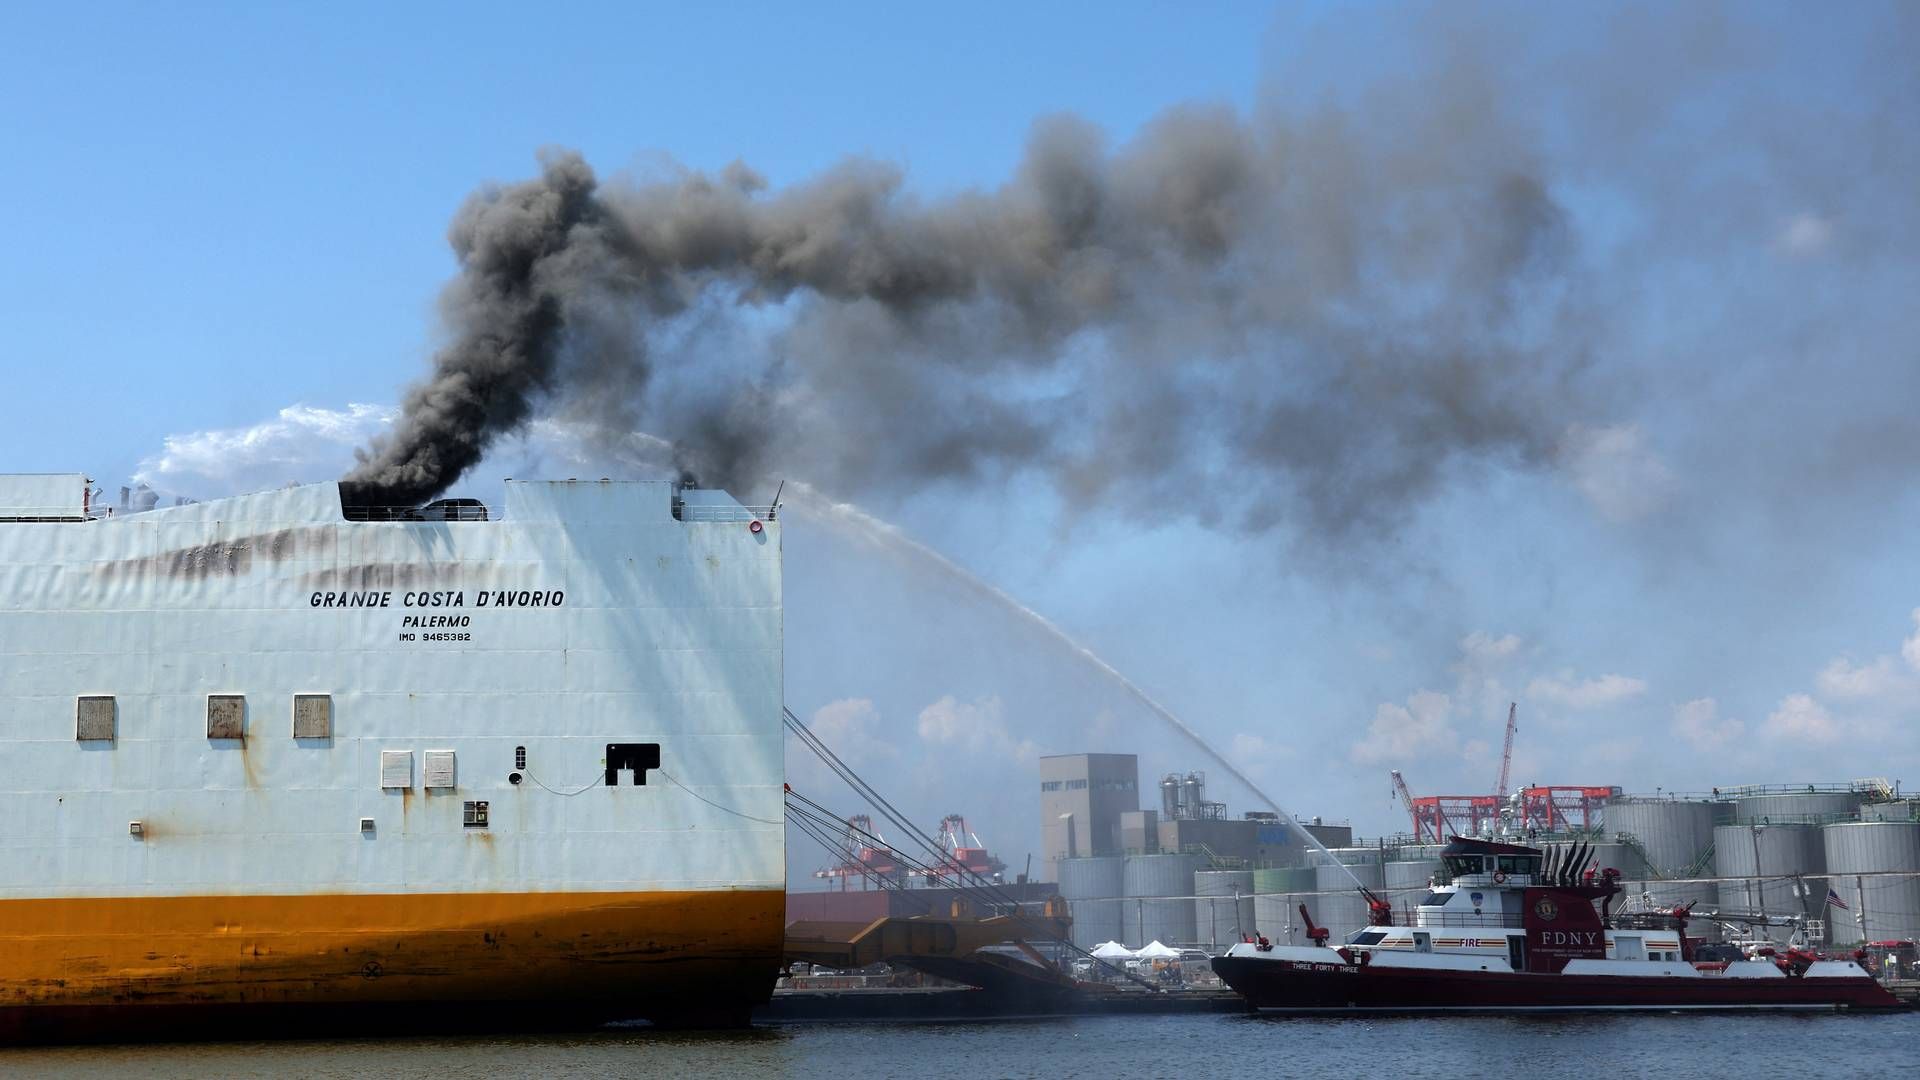 A fatal fire broke out on the large car carrier Grande Costa d'Avorio on Wednesday. | Photo: Mike Segar/Reiuters/Ritzau Scanpix